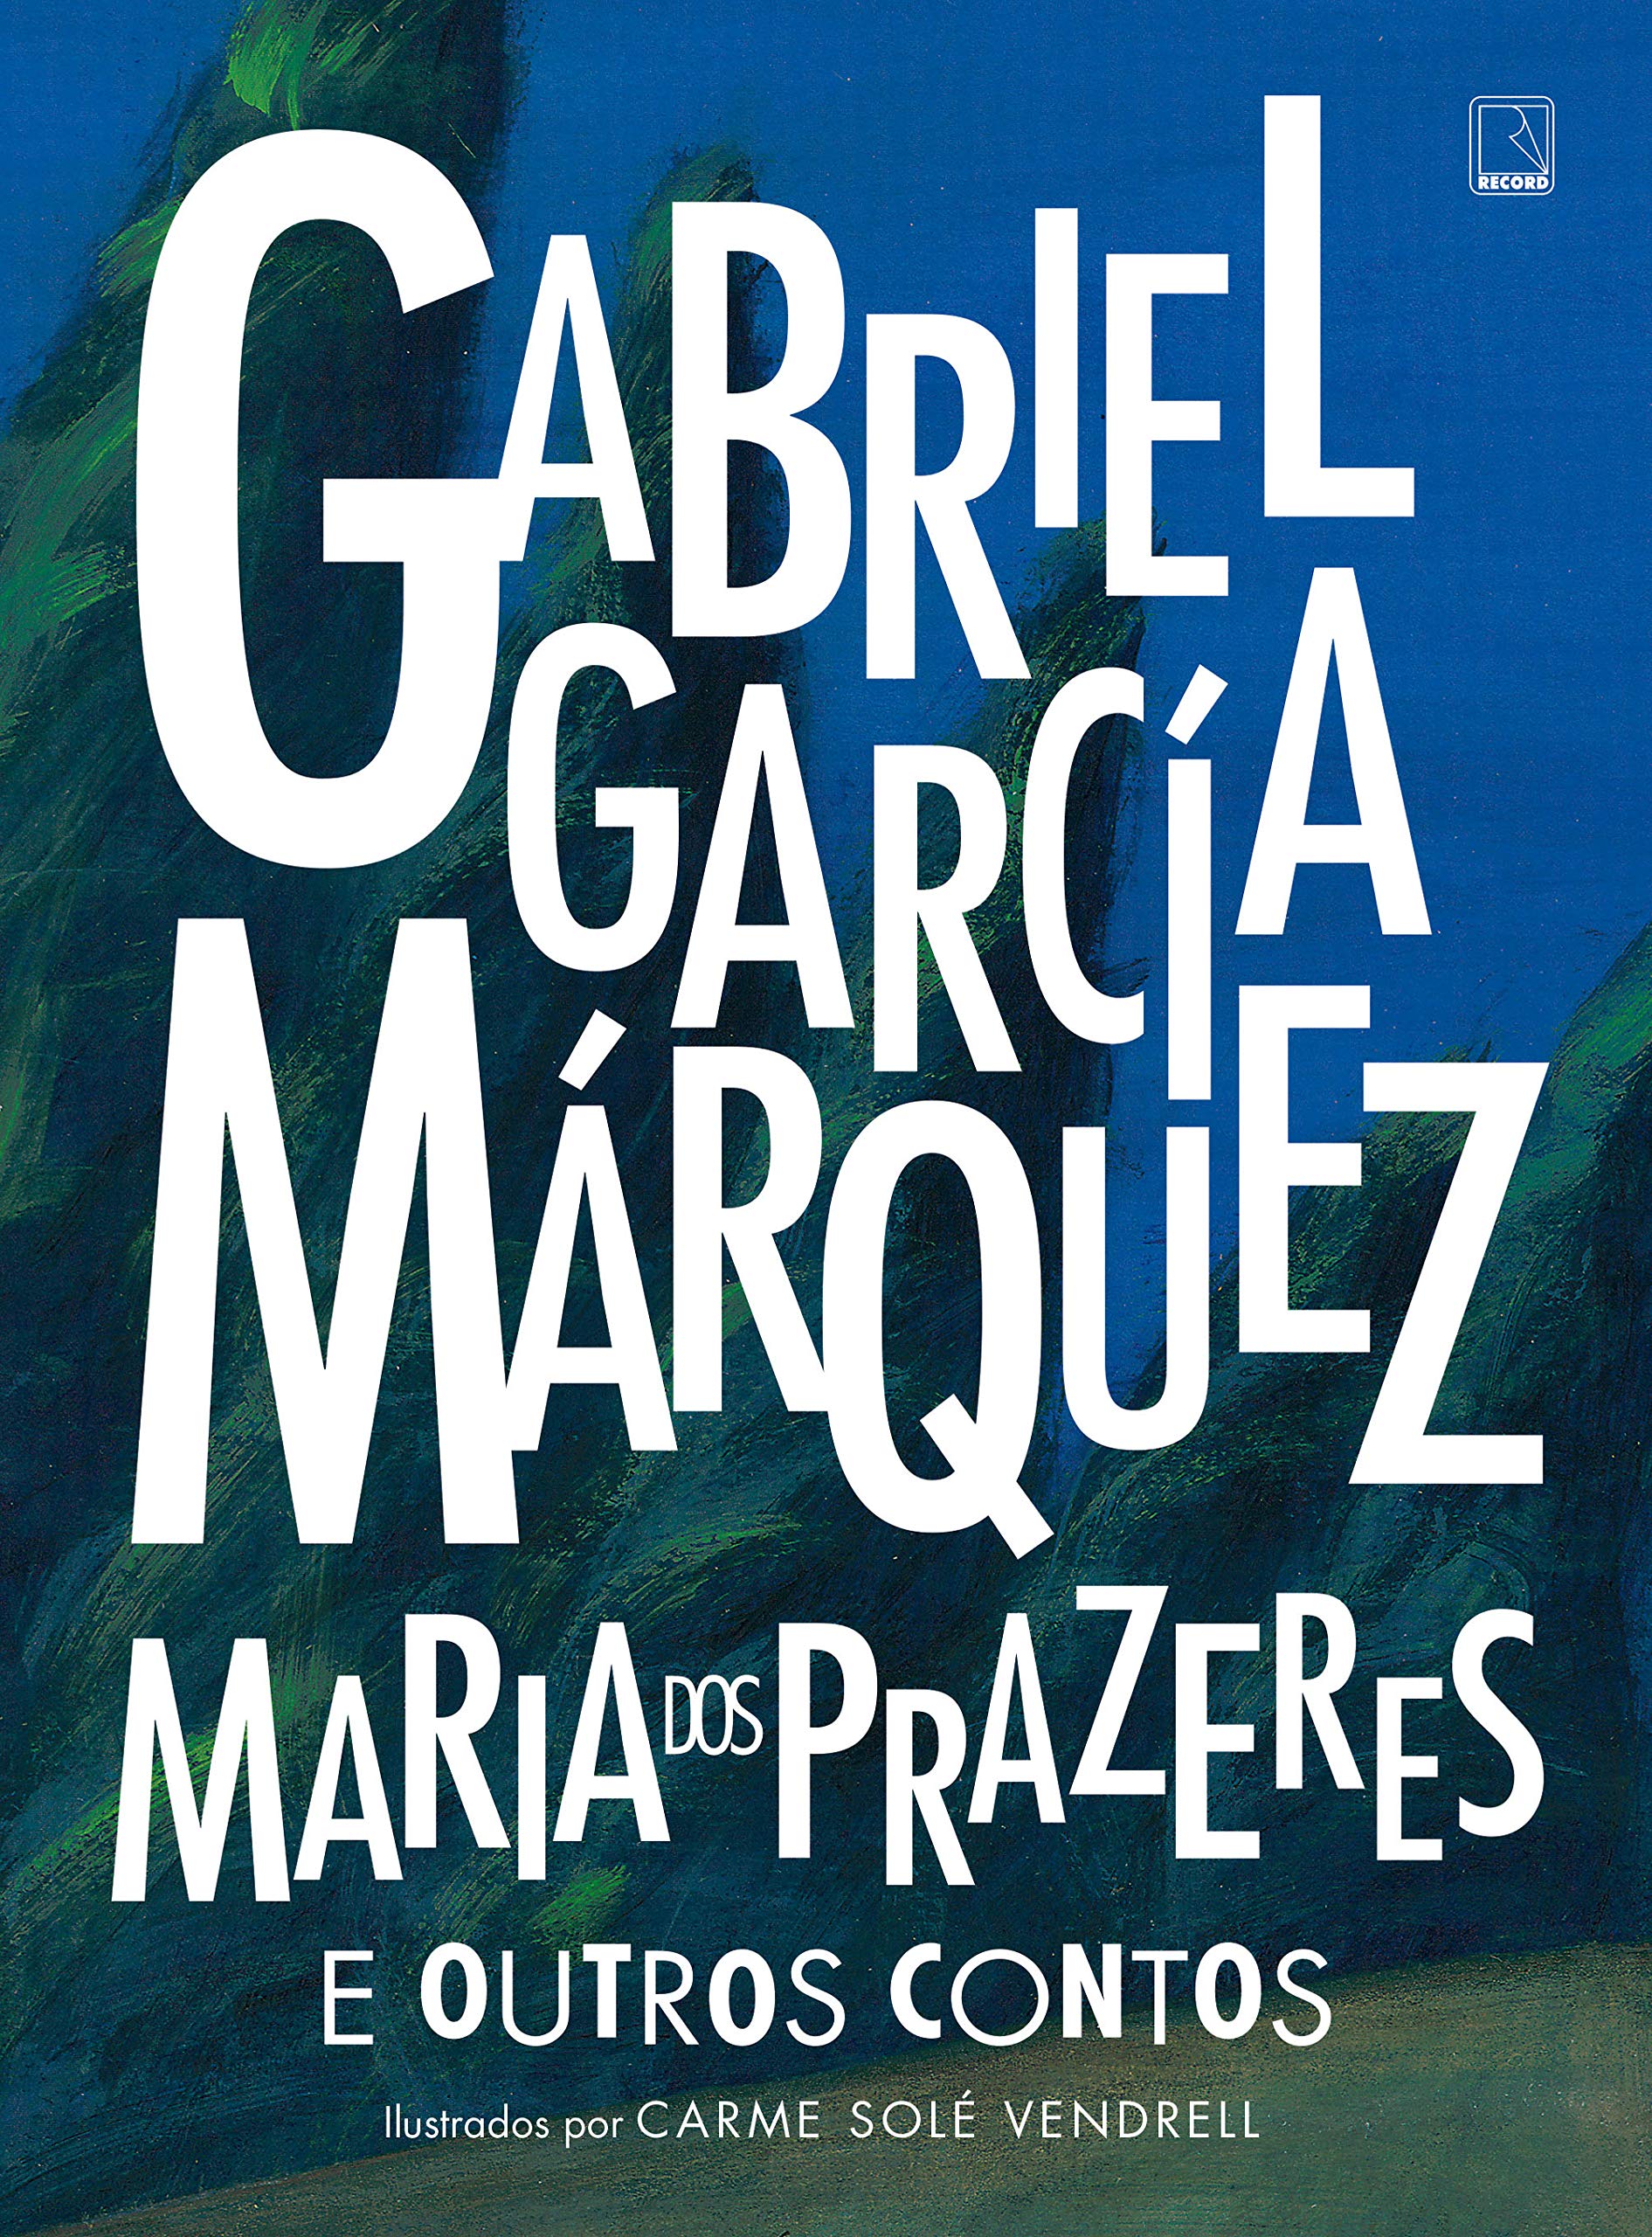 Livro 'Maria dos Prazeres e outros contos' por Gabriel García Márquez